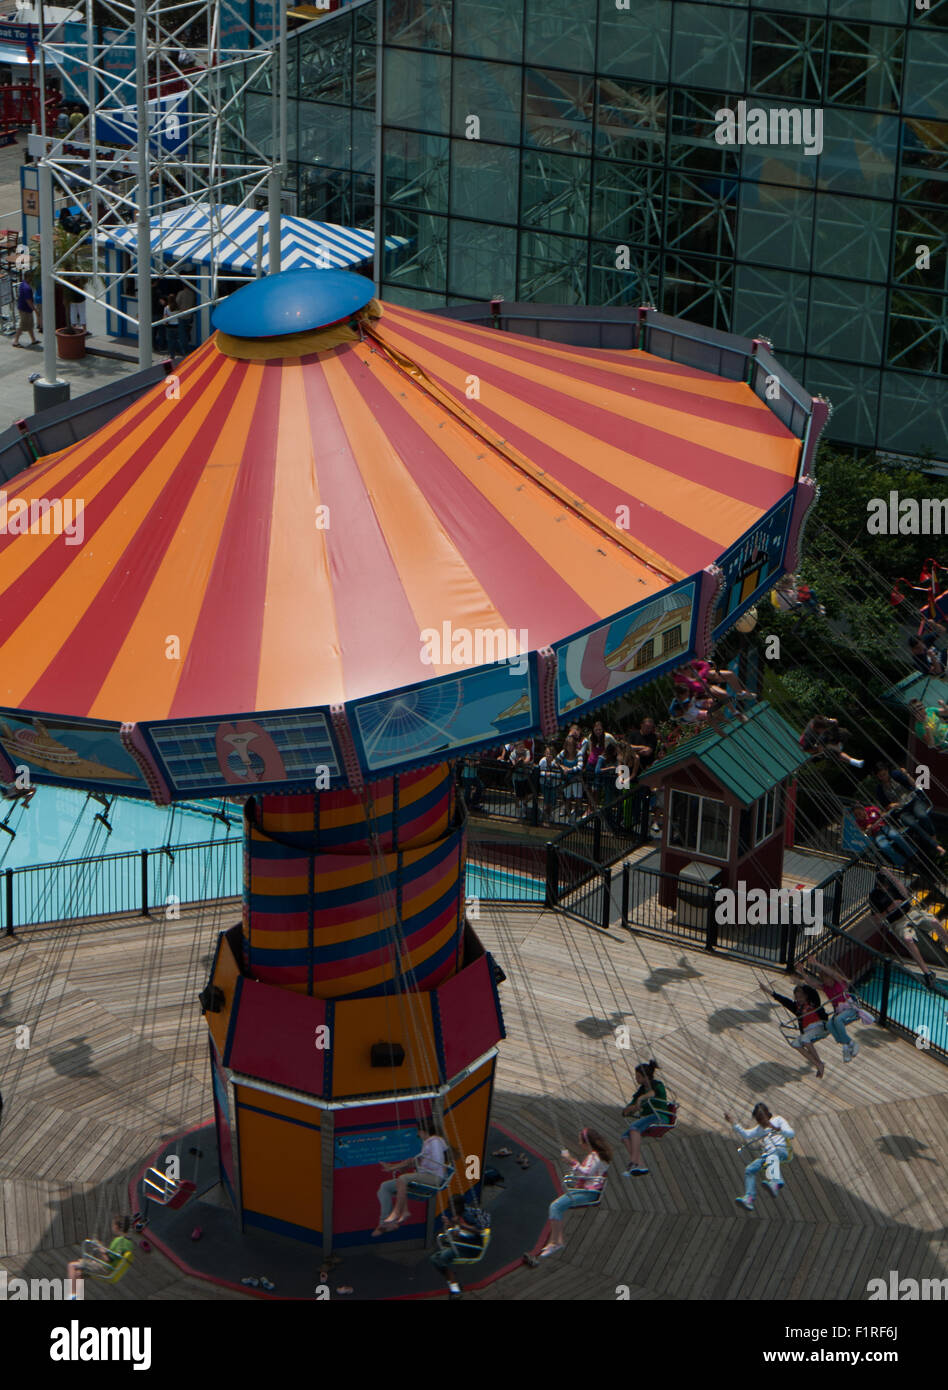 Carousel on Navy Pier in Chicago Illinois Stock Photo